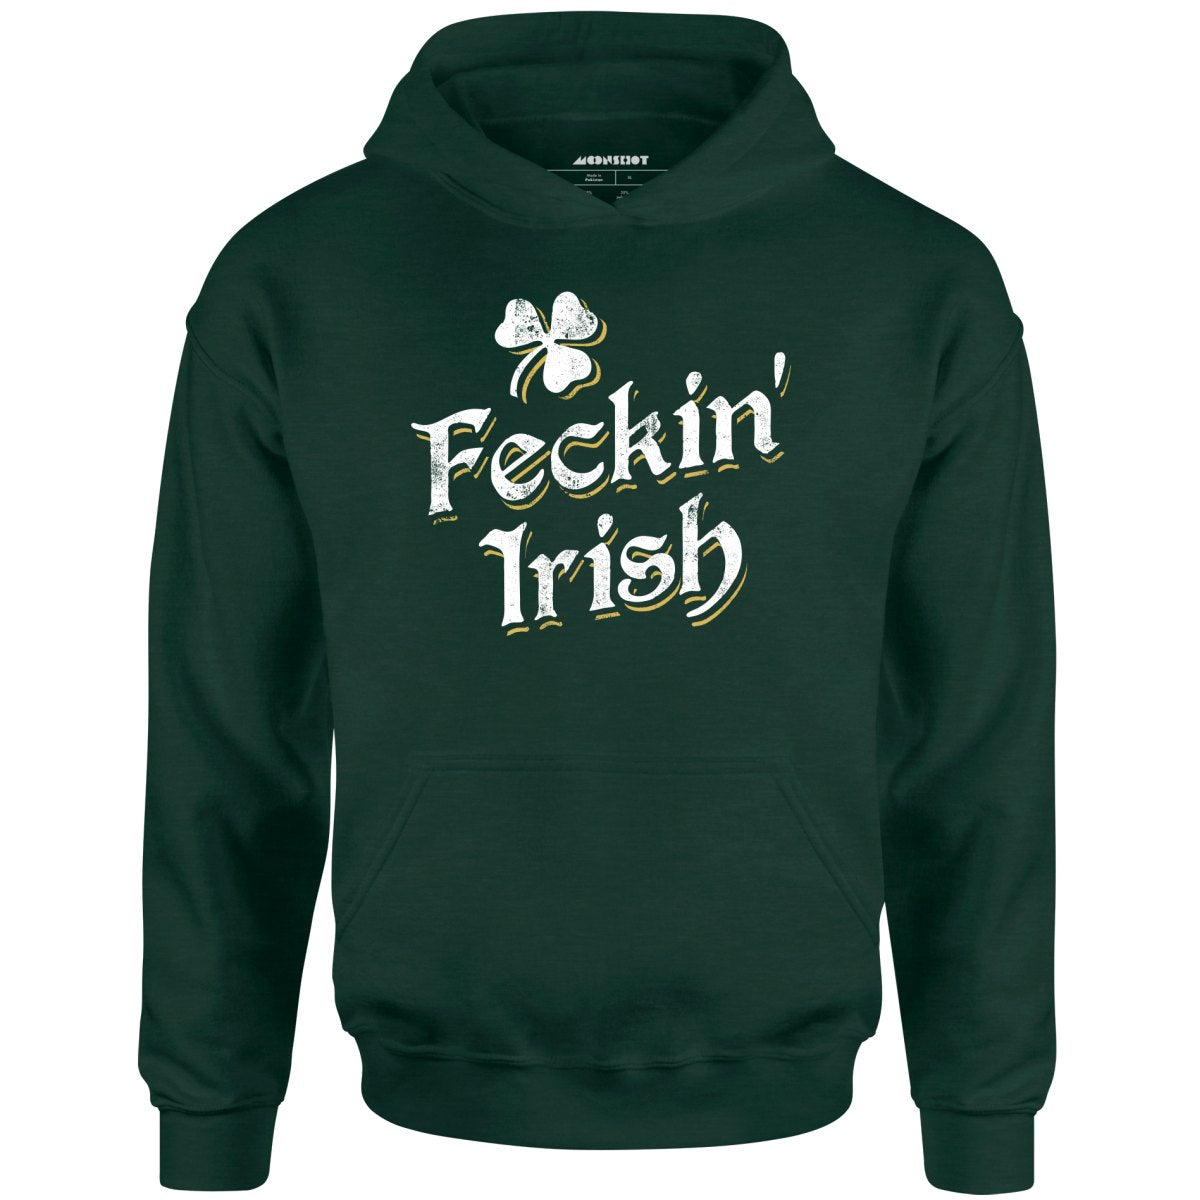 Feckin' Irish - Unisex Hoodie